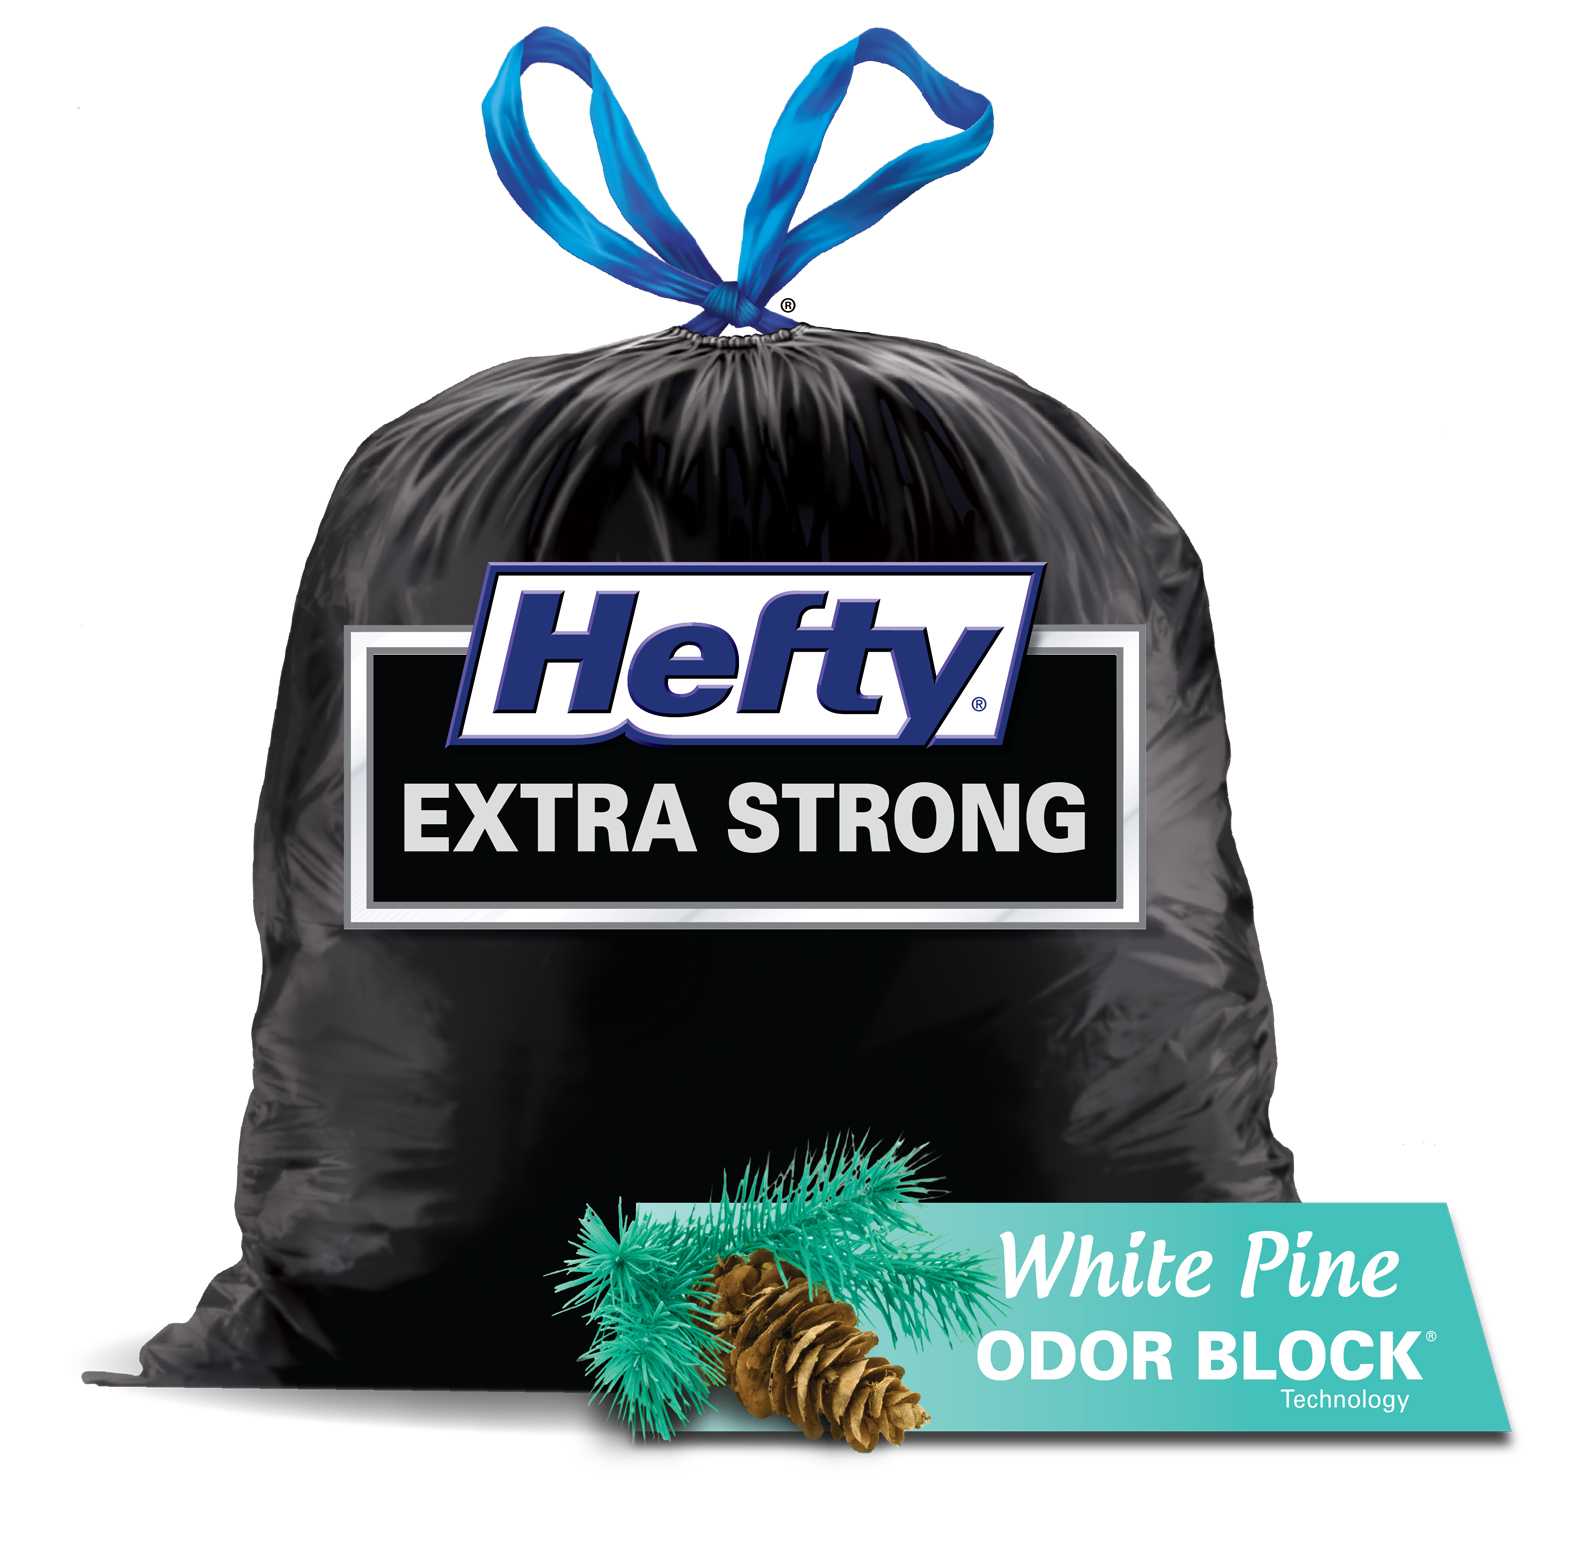 https://mms.businesswire.com/media/20140514006106/en/415889/5/Hefty_Extra_Strong_with_White_Pine_Odor_Block_large_black_bag.jpg